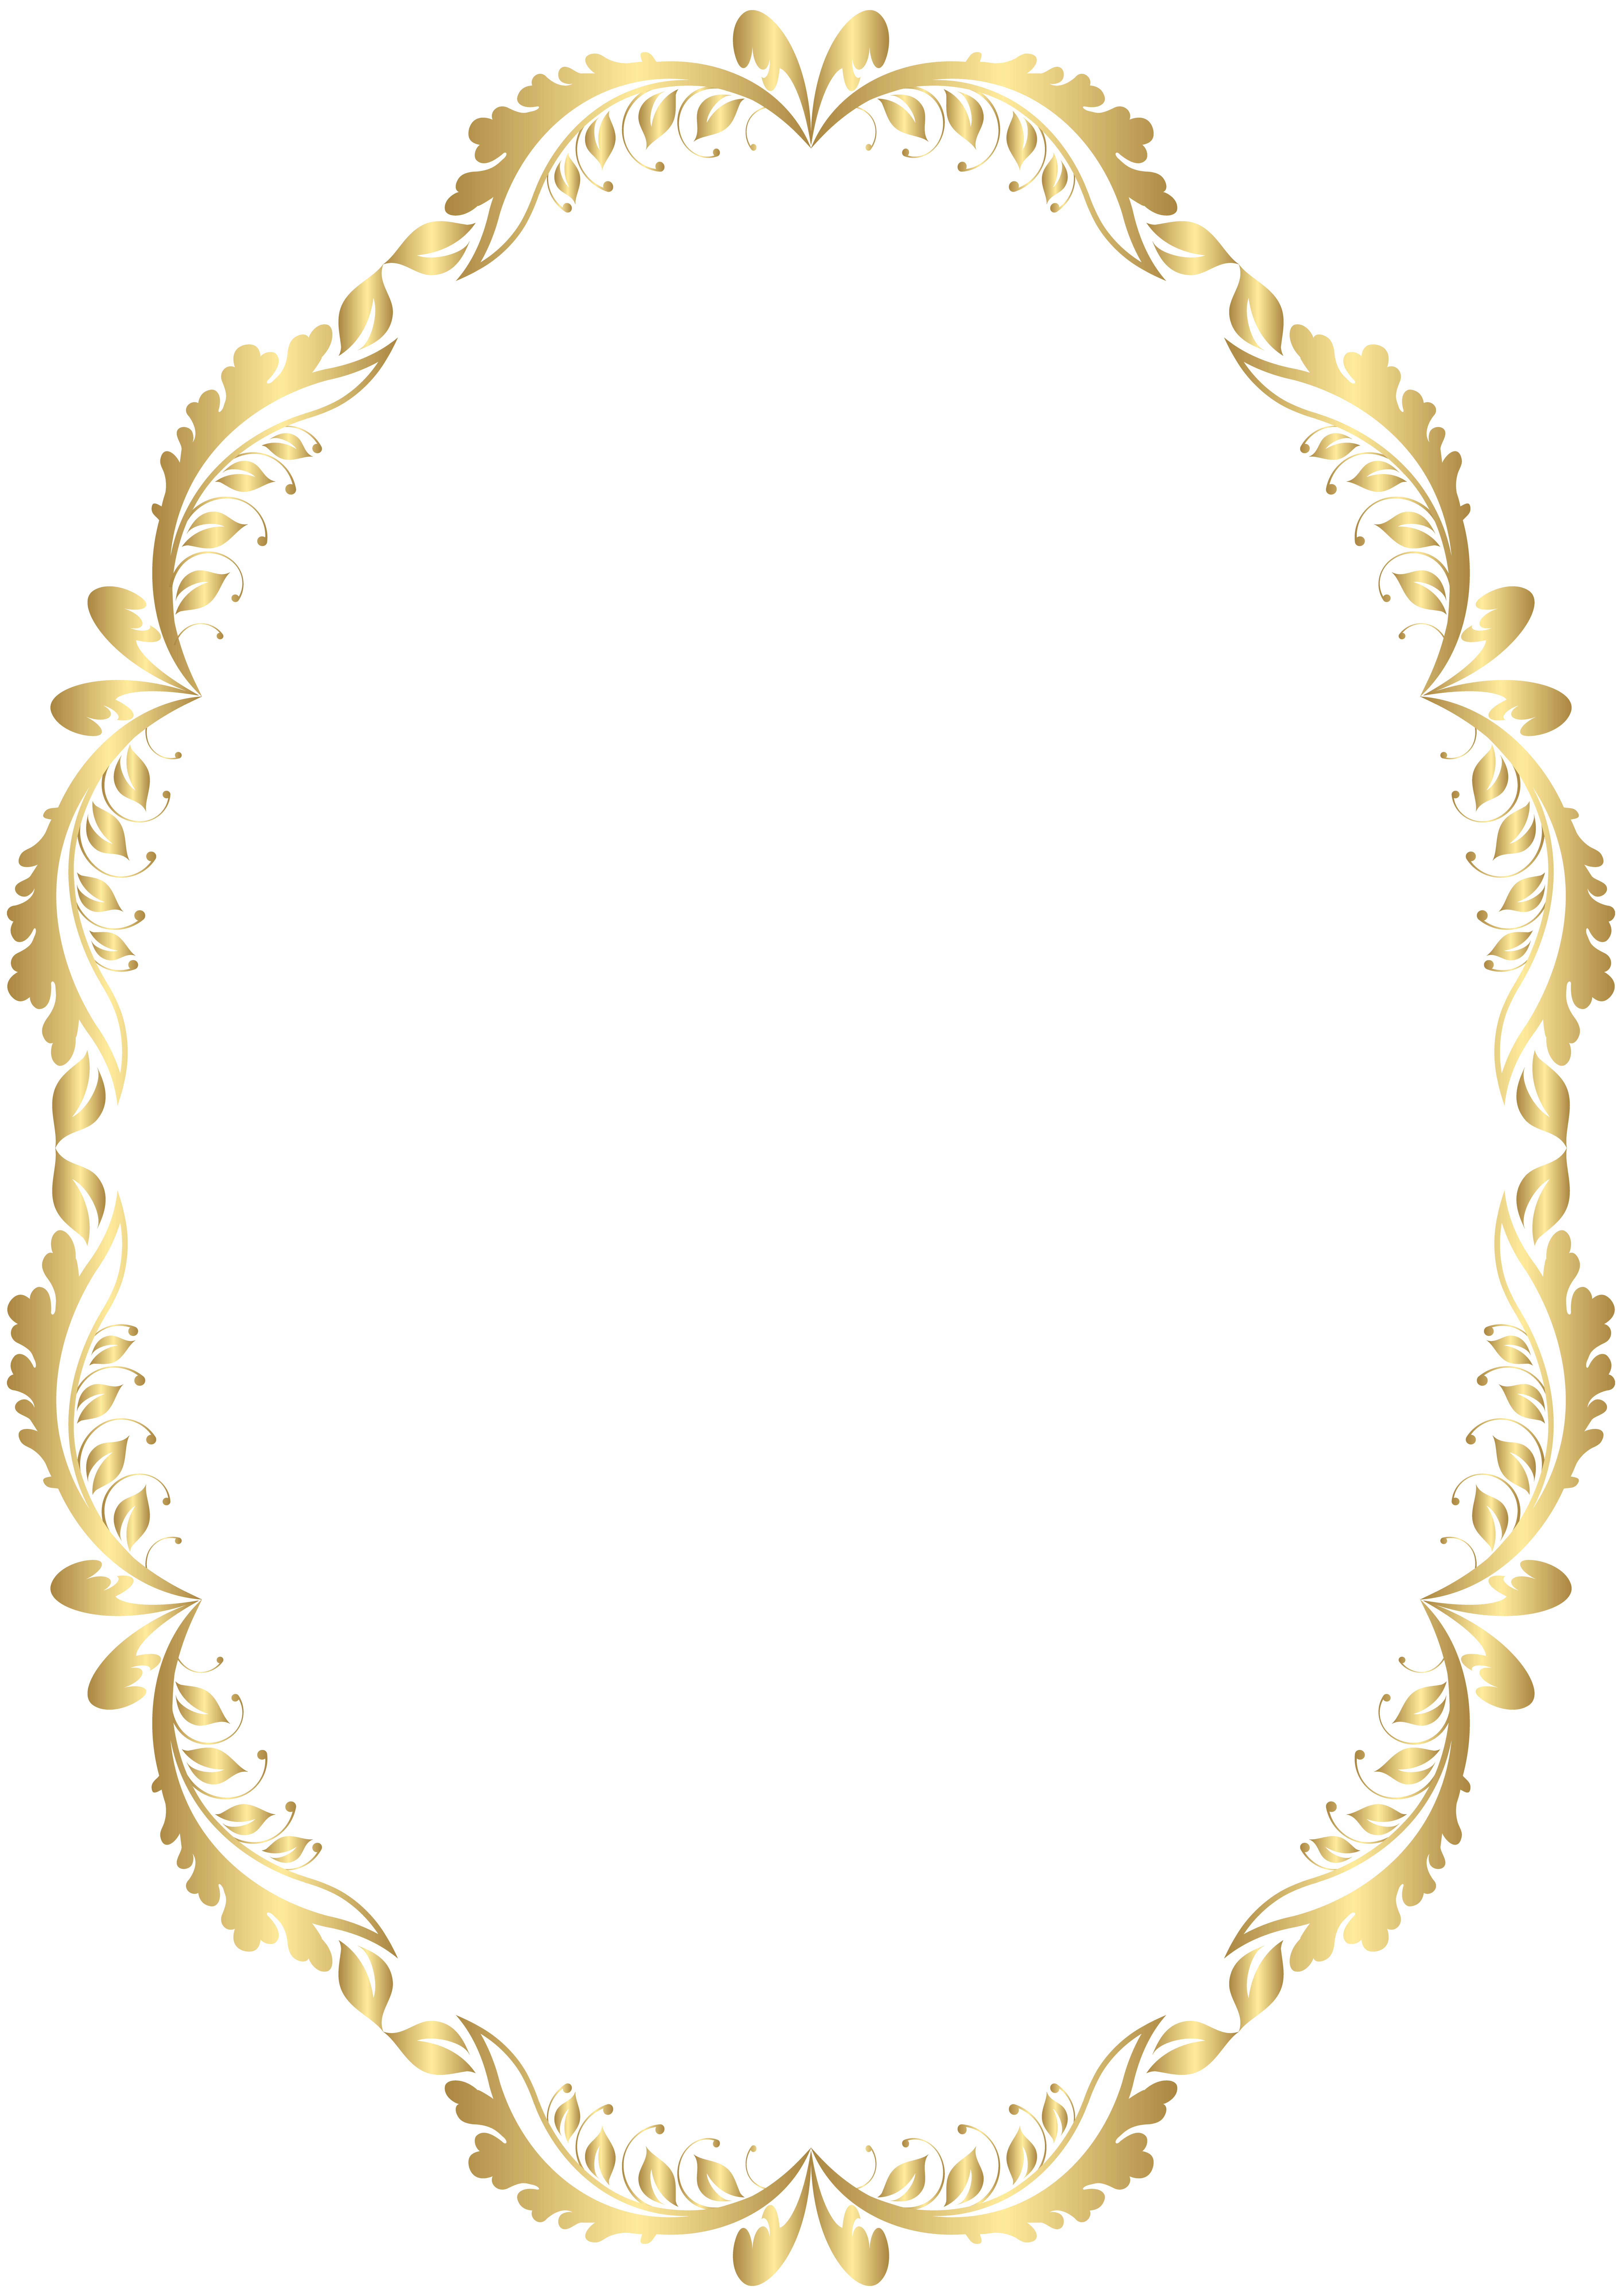 Groom clipart ball chain. Golden oval border transparent